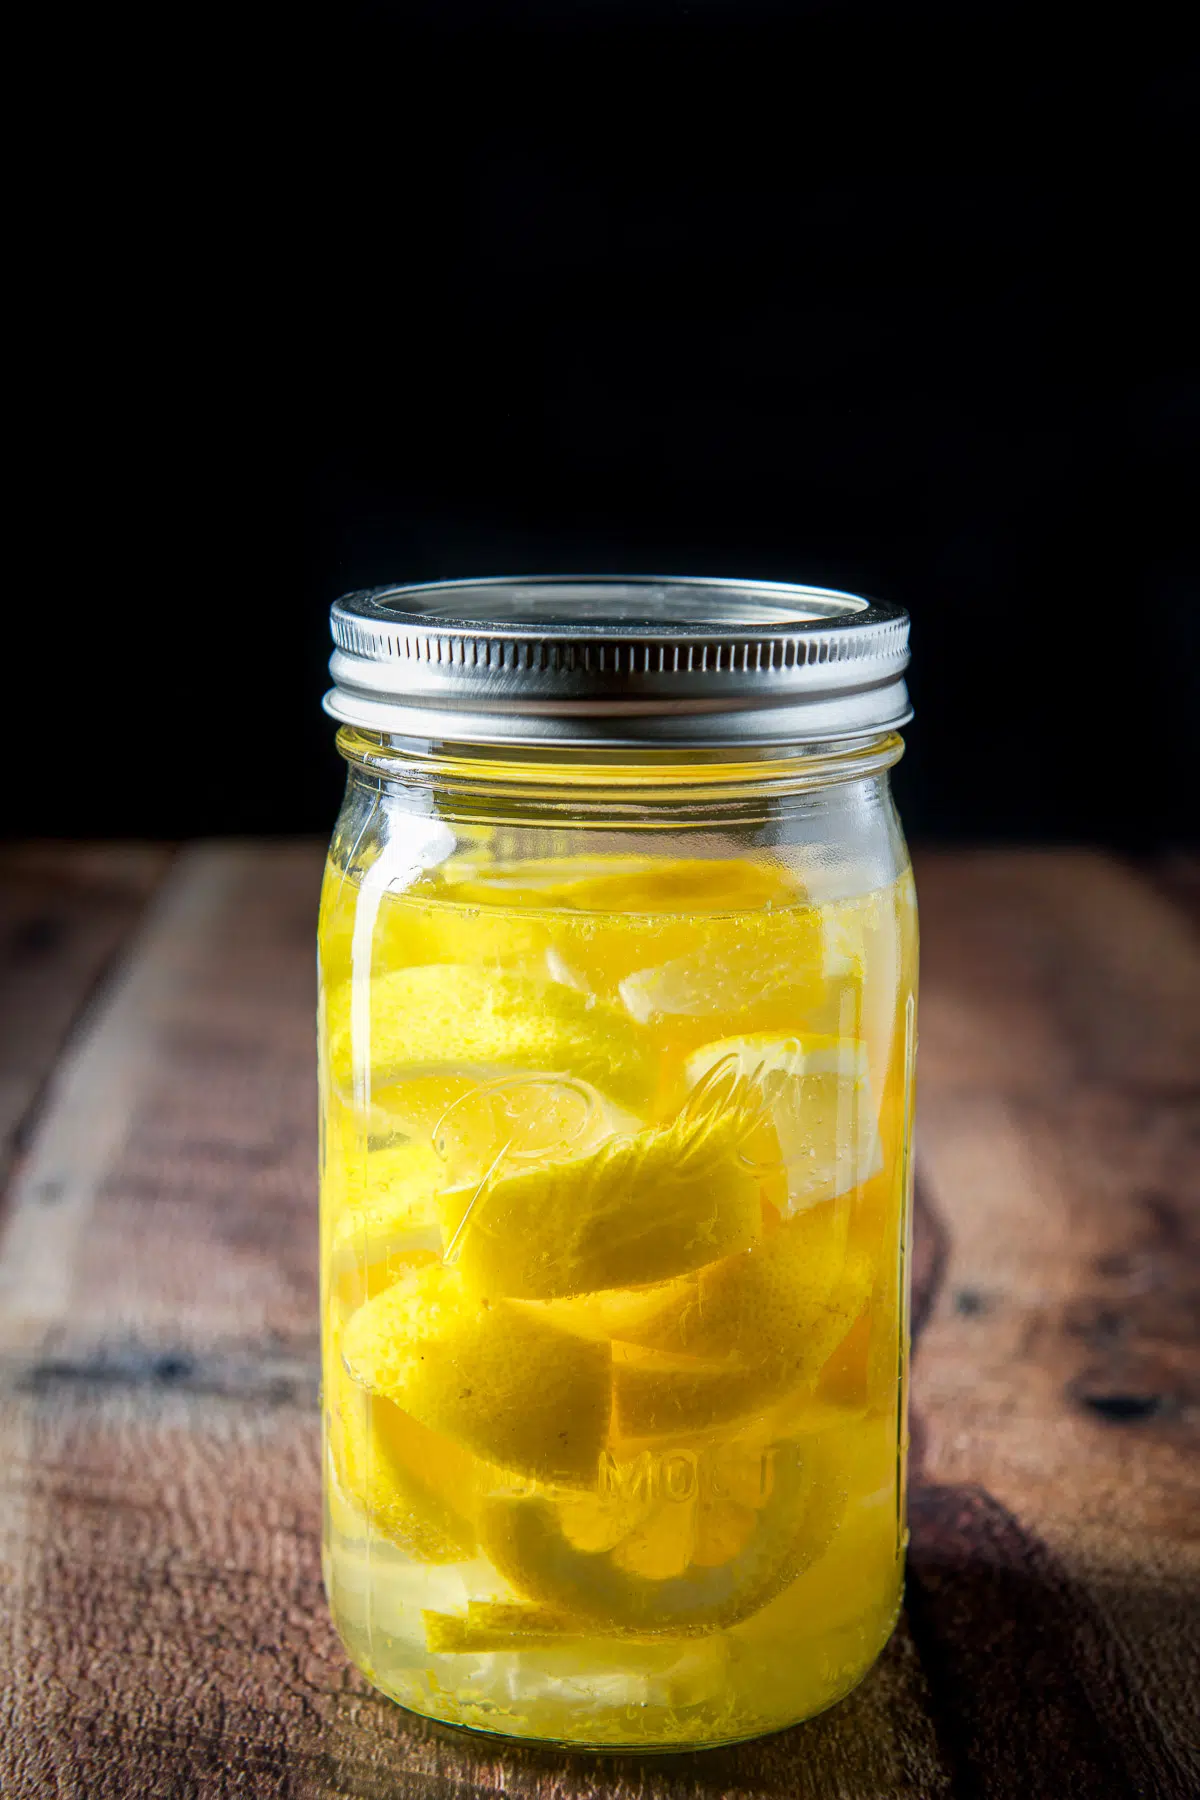 The jar with vodka and lemon shaken